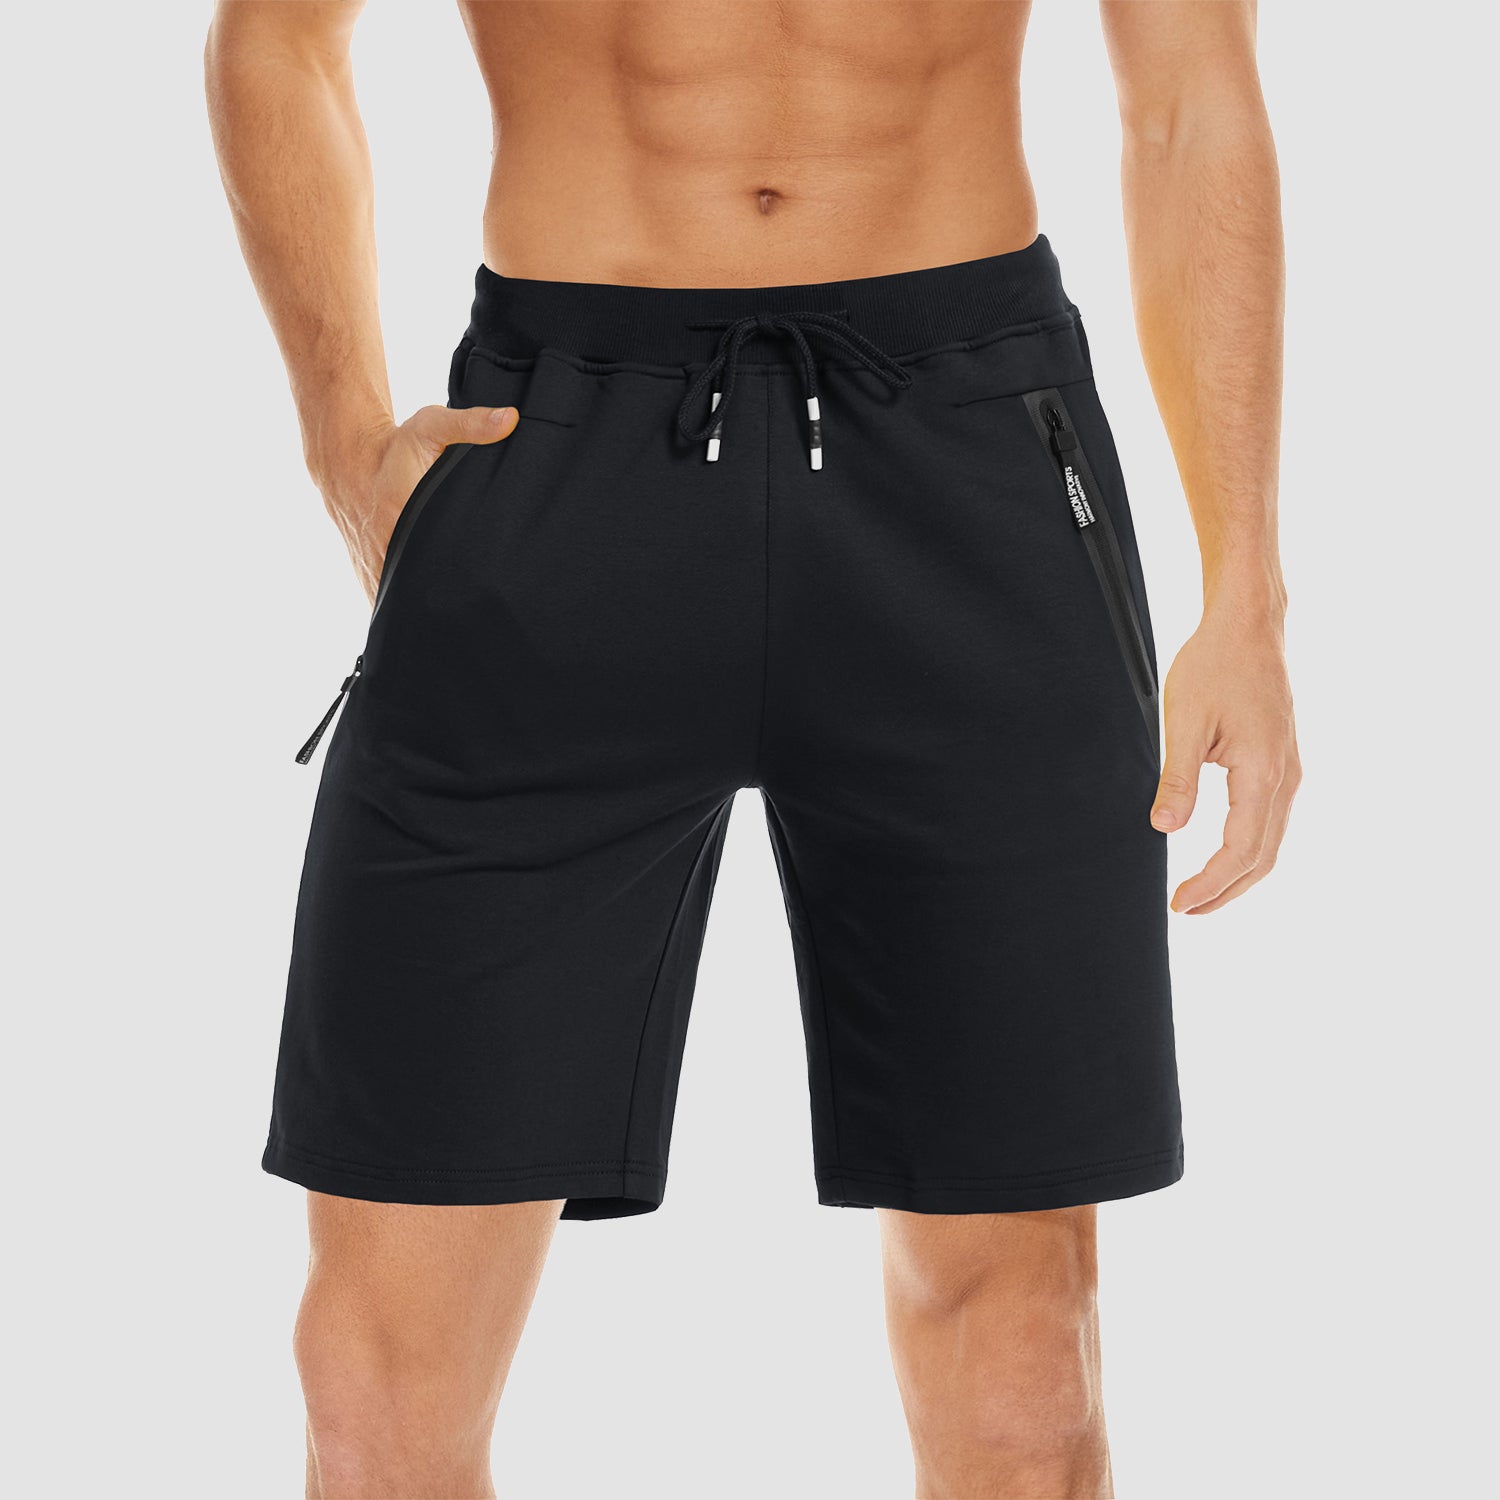 Men Cotton Running Elastic Waist Zipper Pockets Drawstring Gym Trainging Fitness Sports Joggers Shorts